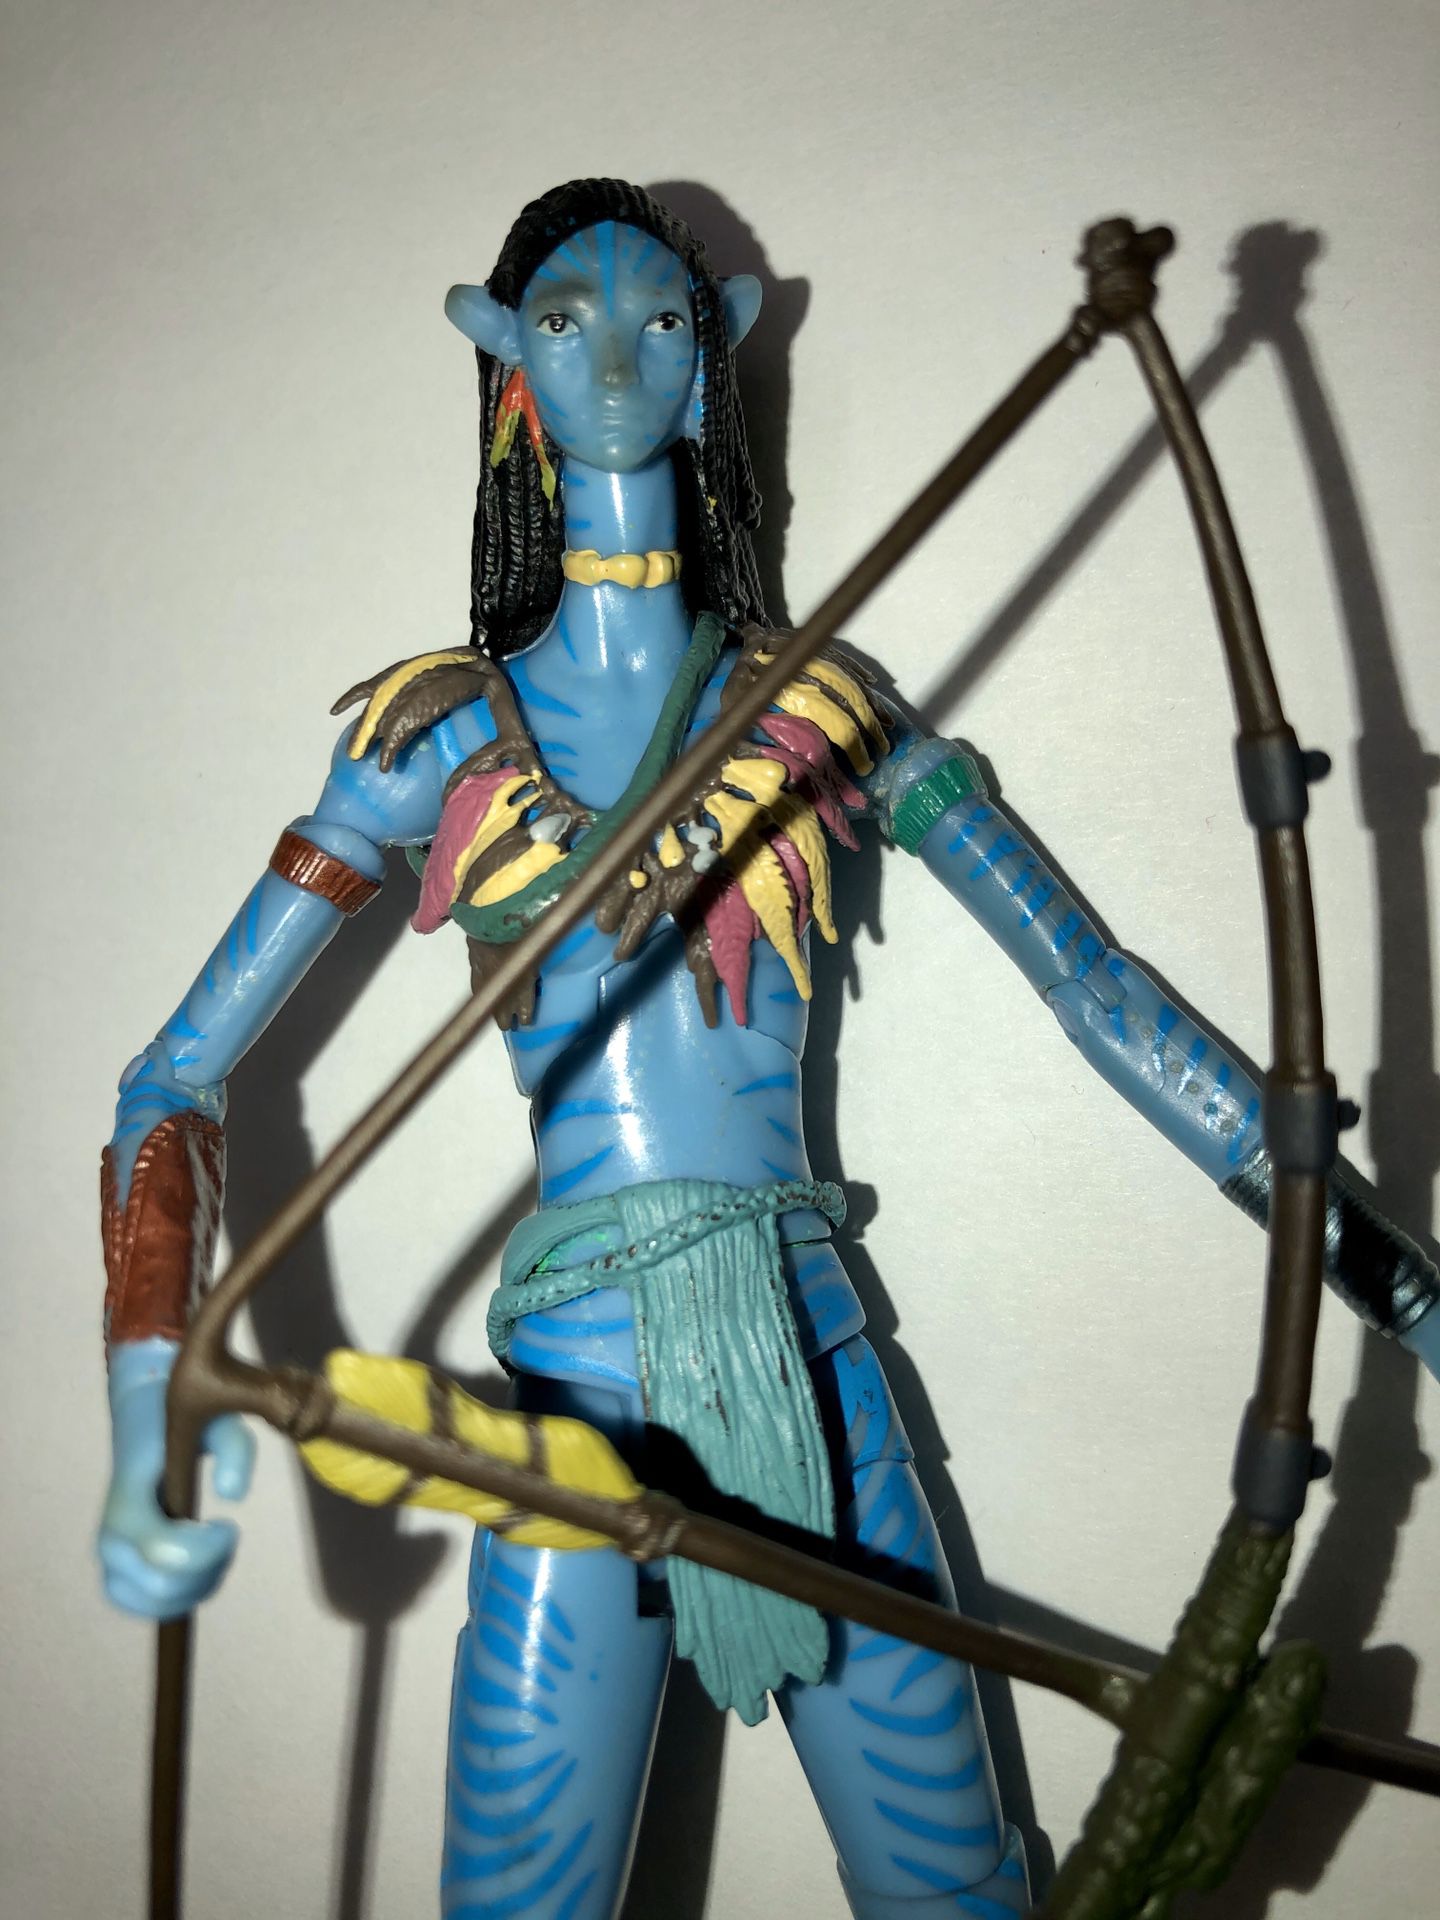 Avatar Movie “Neytiri” Action Figure 7 inch